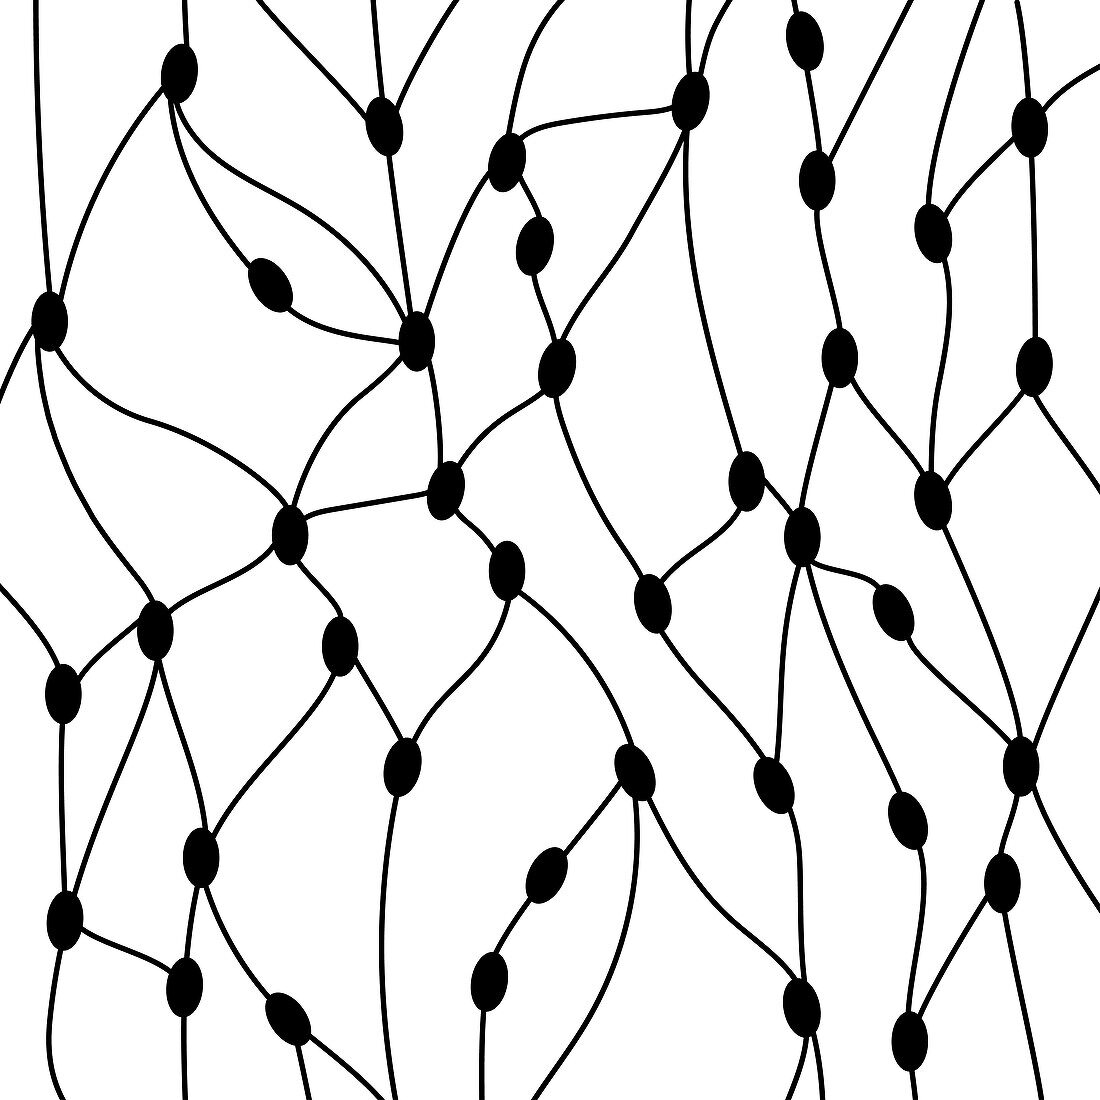 Lymph nodes, conceptual illustration